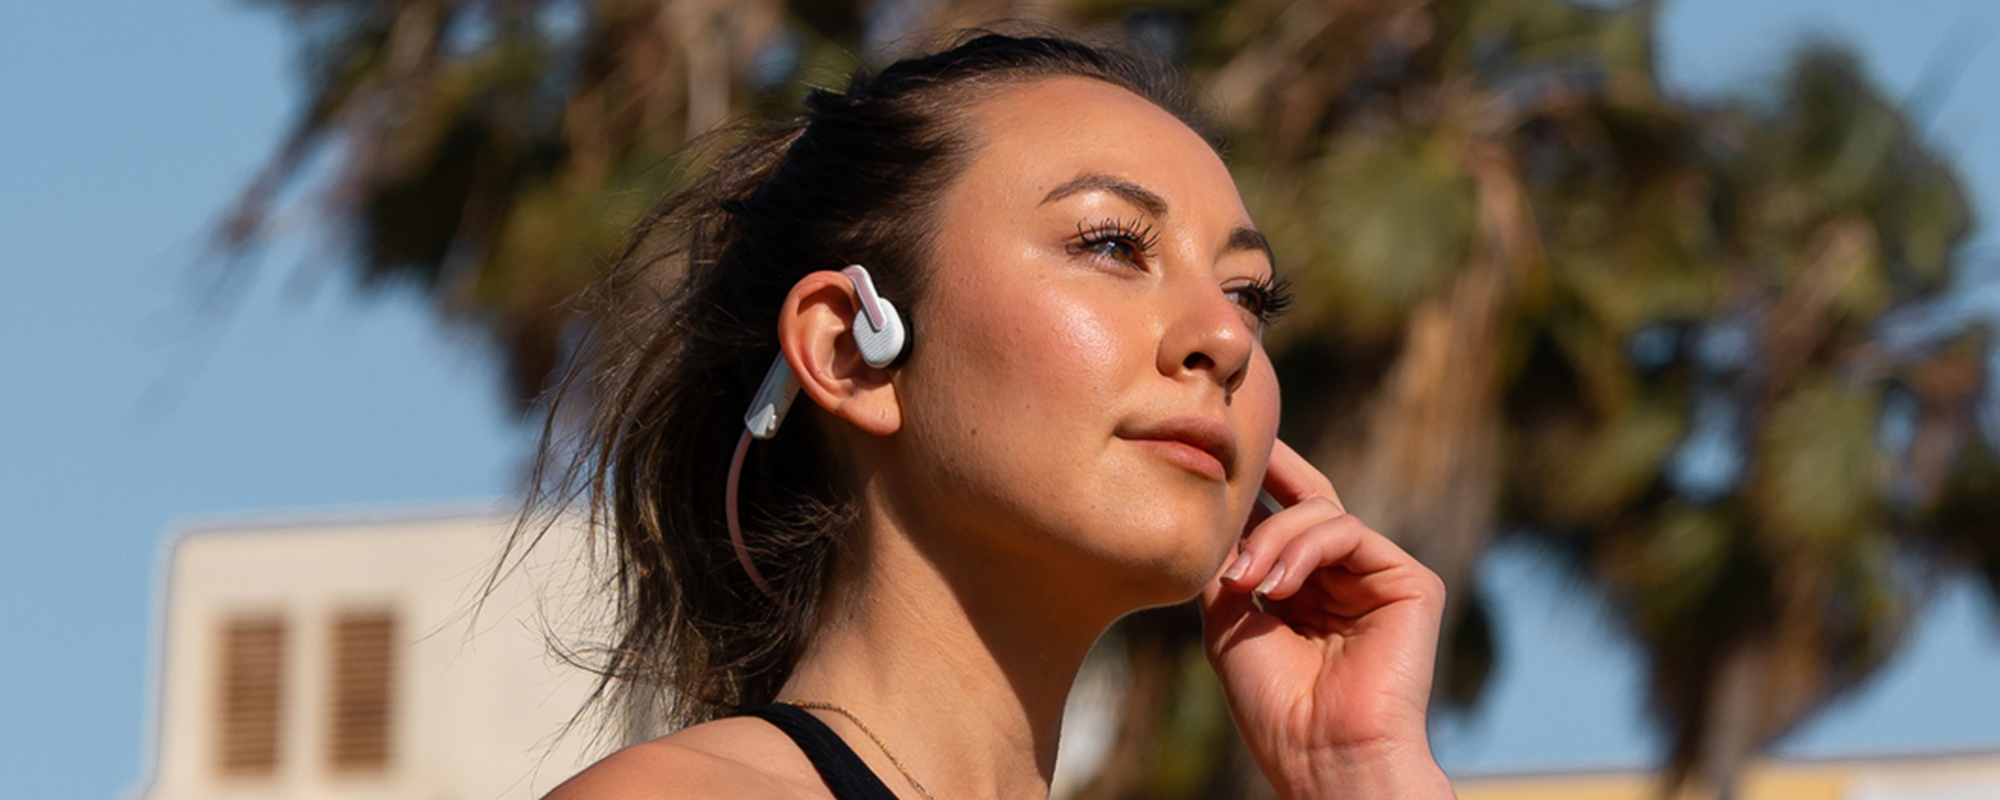 Woman running outside wearing AfterShokz OpenMove wireless headphones